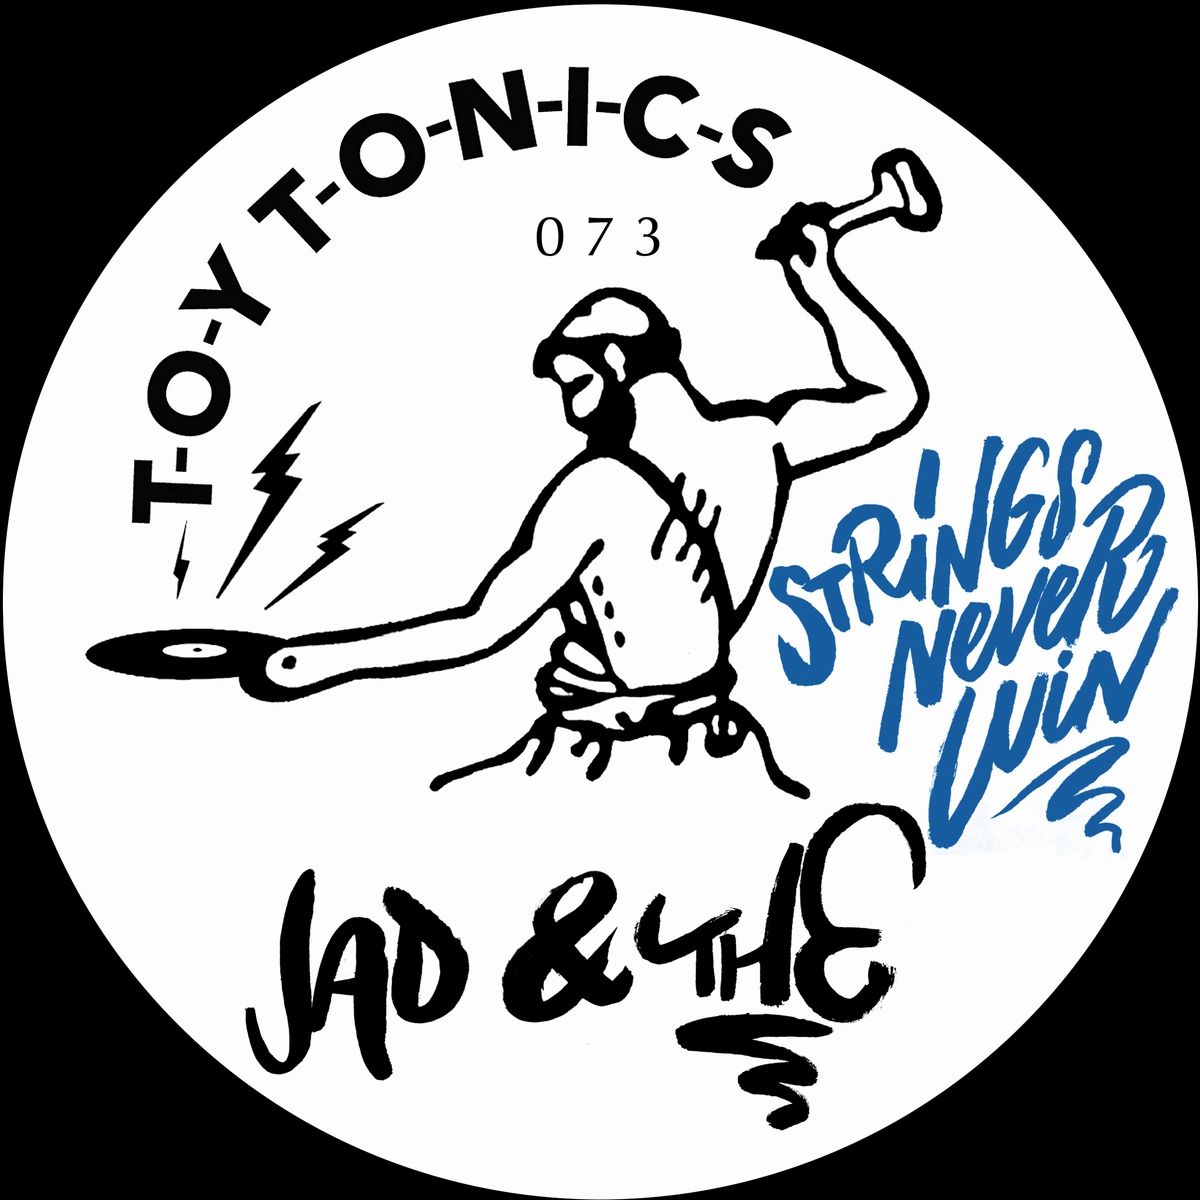 Jad & The - Strings Never Win / Toy Tonics